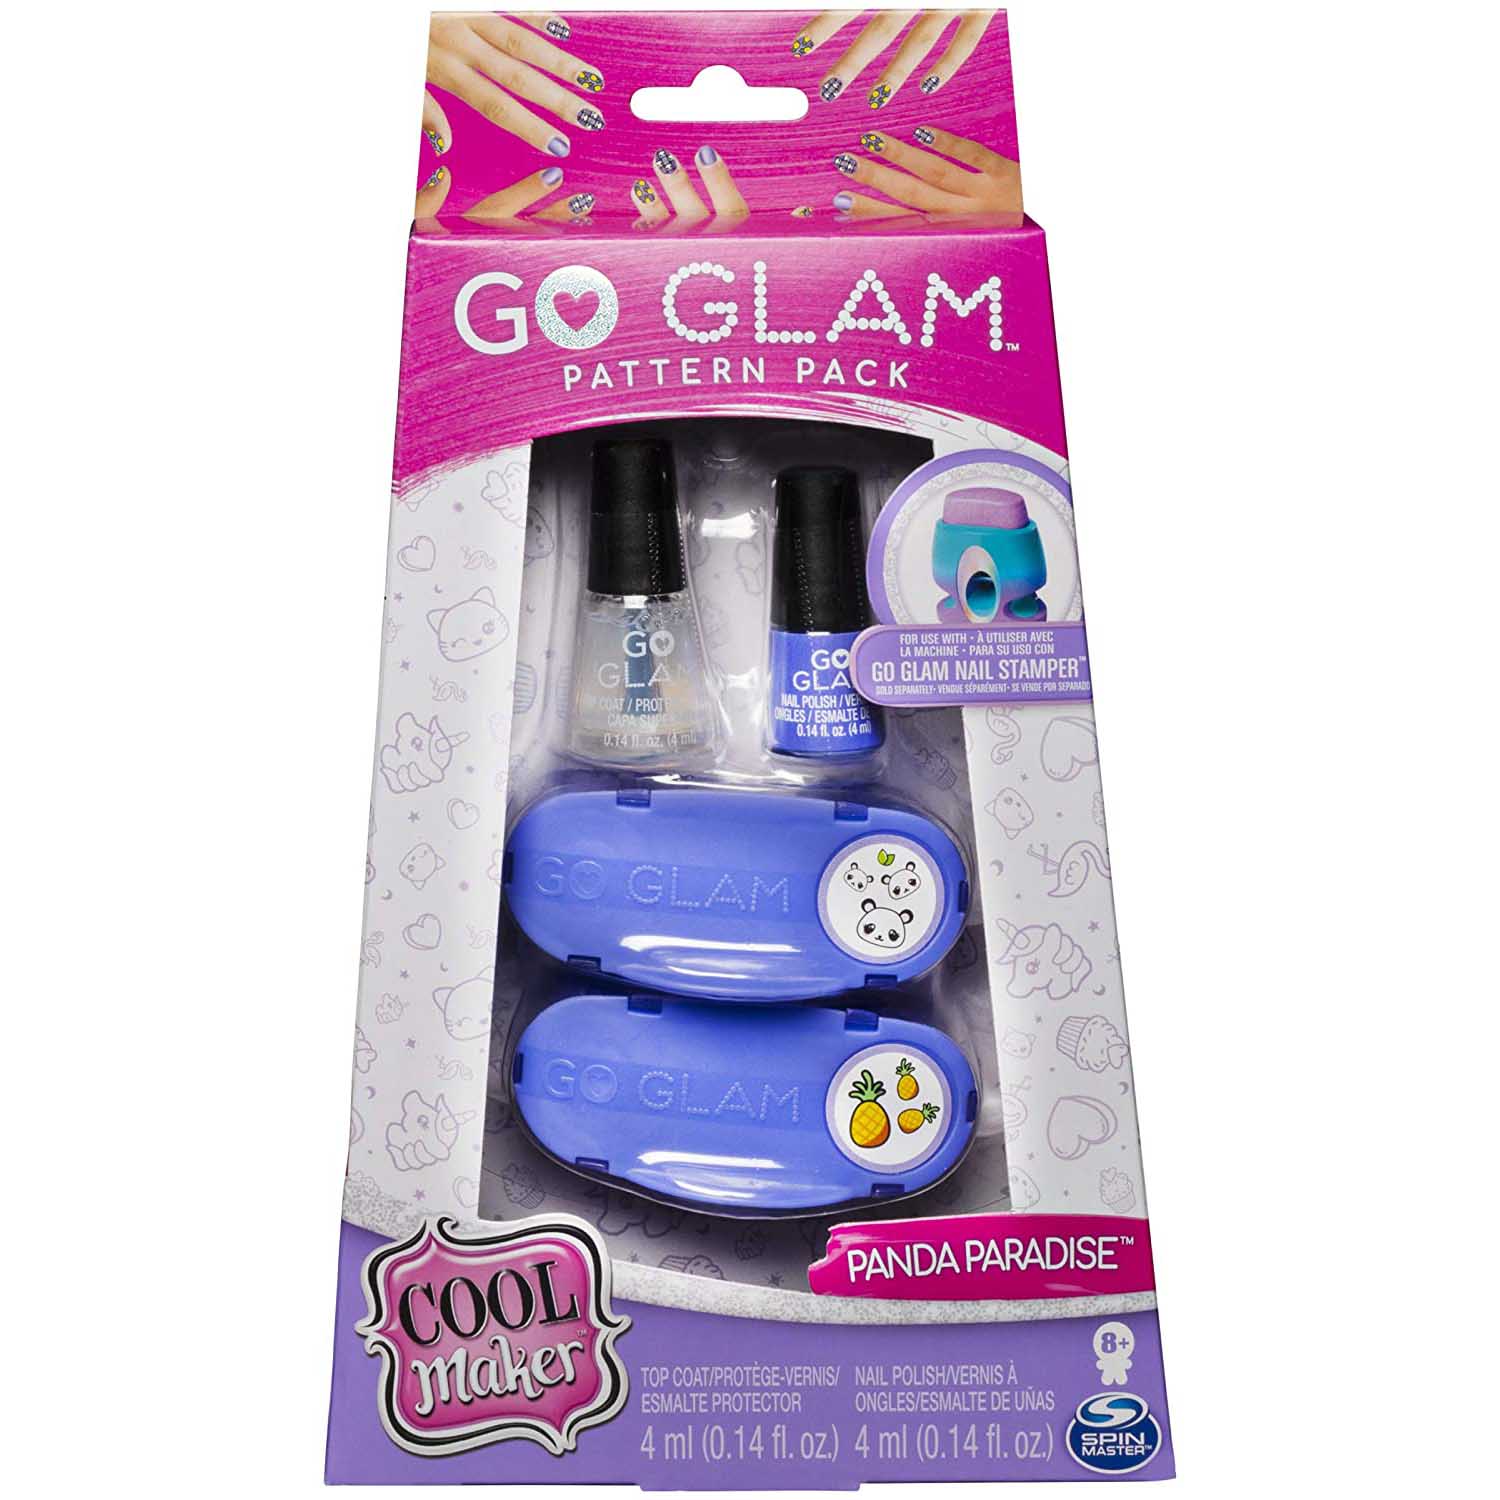 Go Glam Glitter Nails Refill Pattern Pack - Panda Paradise